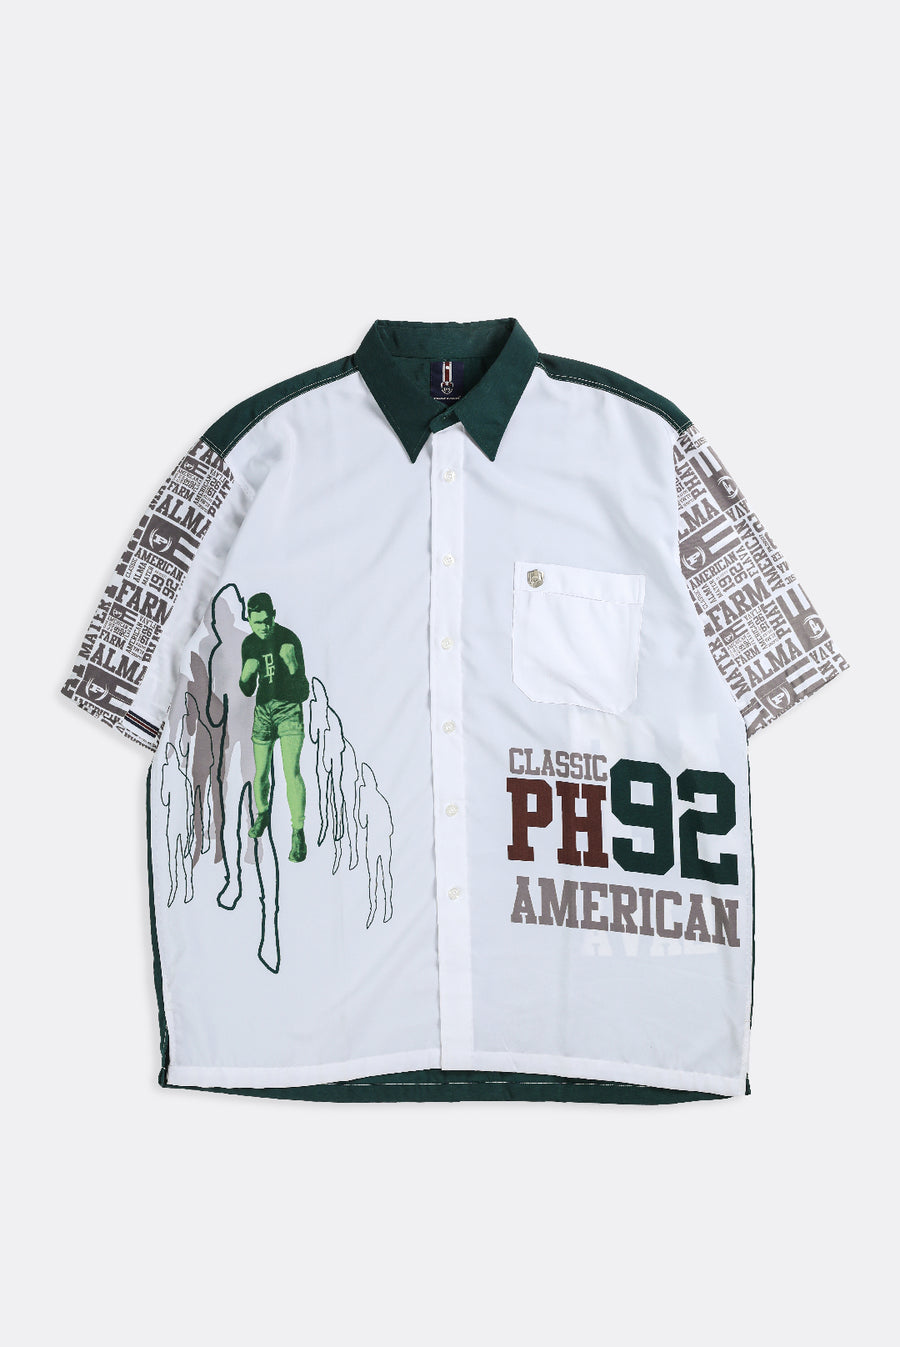 Deadstock Phat Farm Collared Shirt - XL, XXL